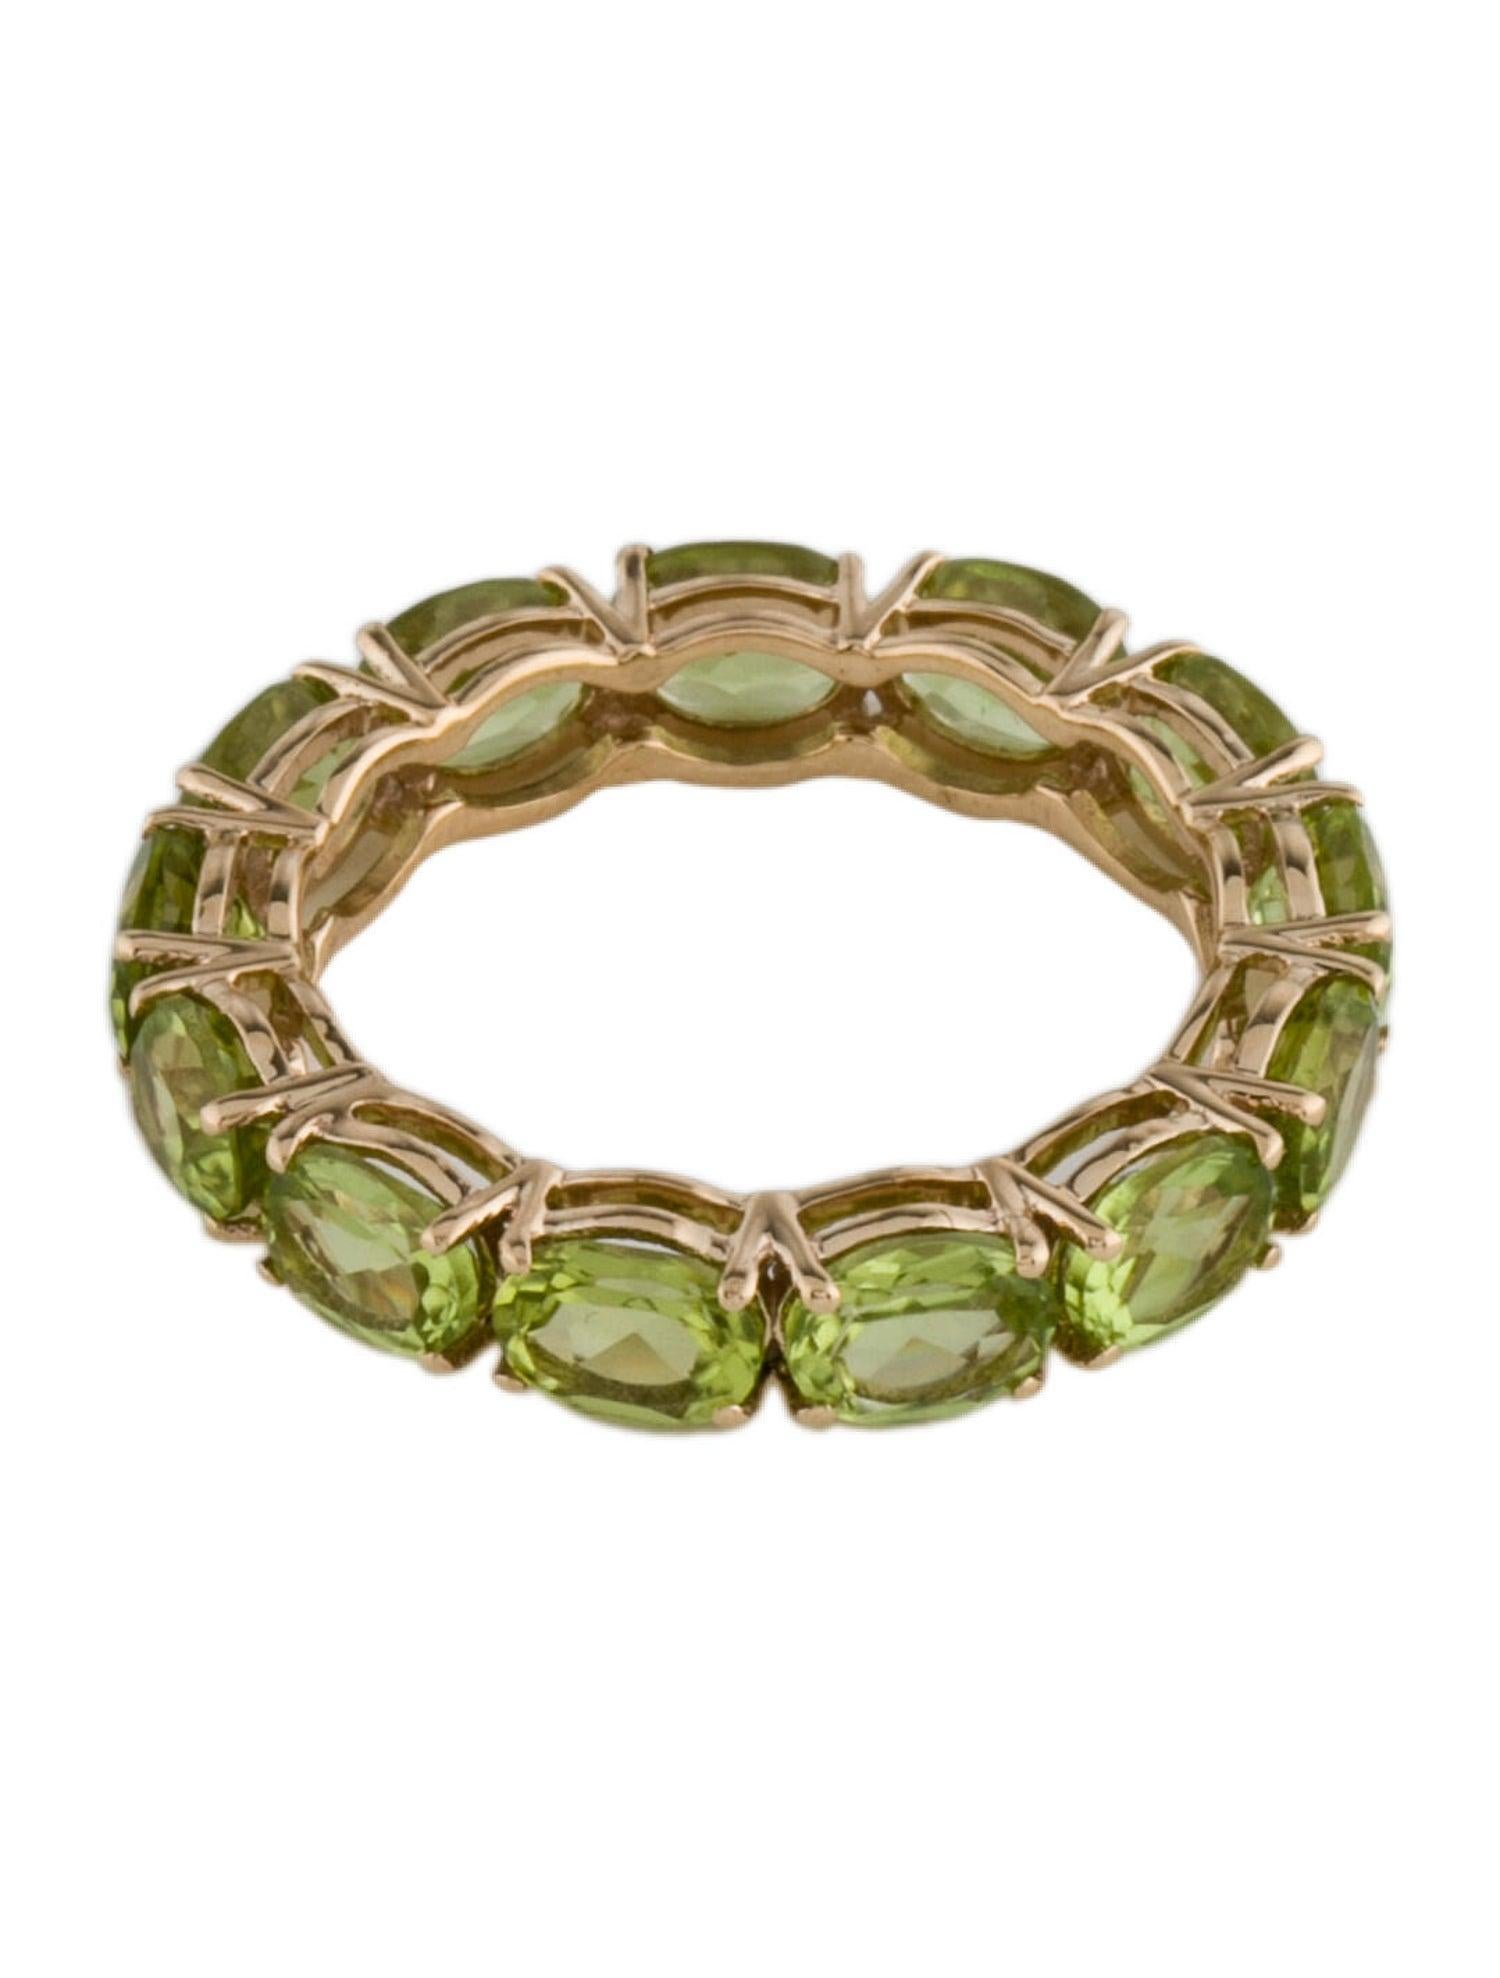 Oval Cut Elegant 14K Peridot Eternity Band Ring - Size 6.75  Luxurious Gemstone Jewelry For Sale